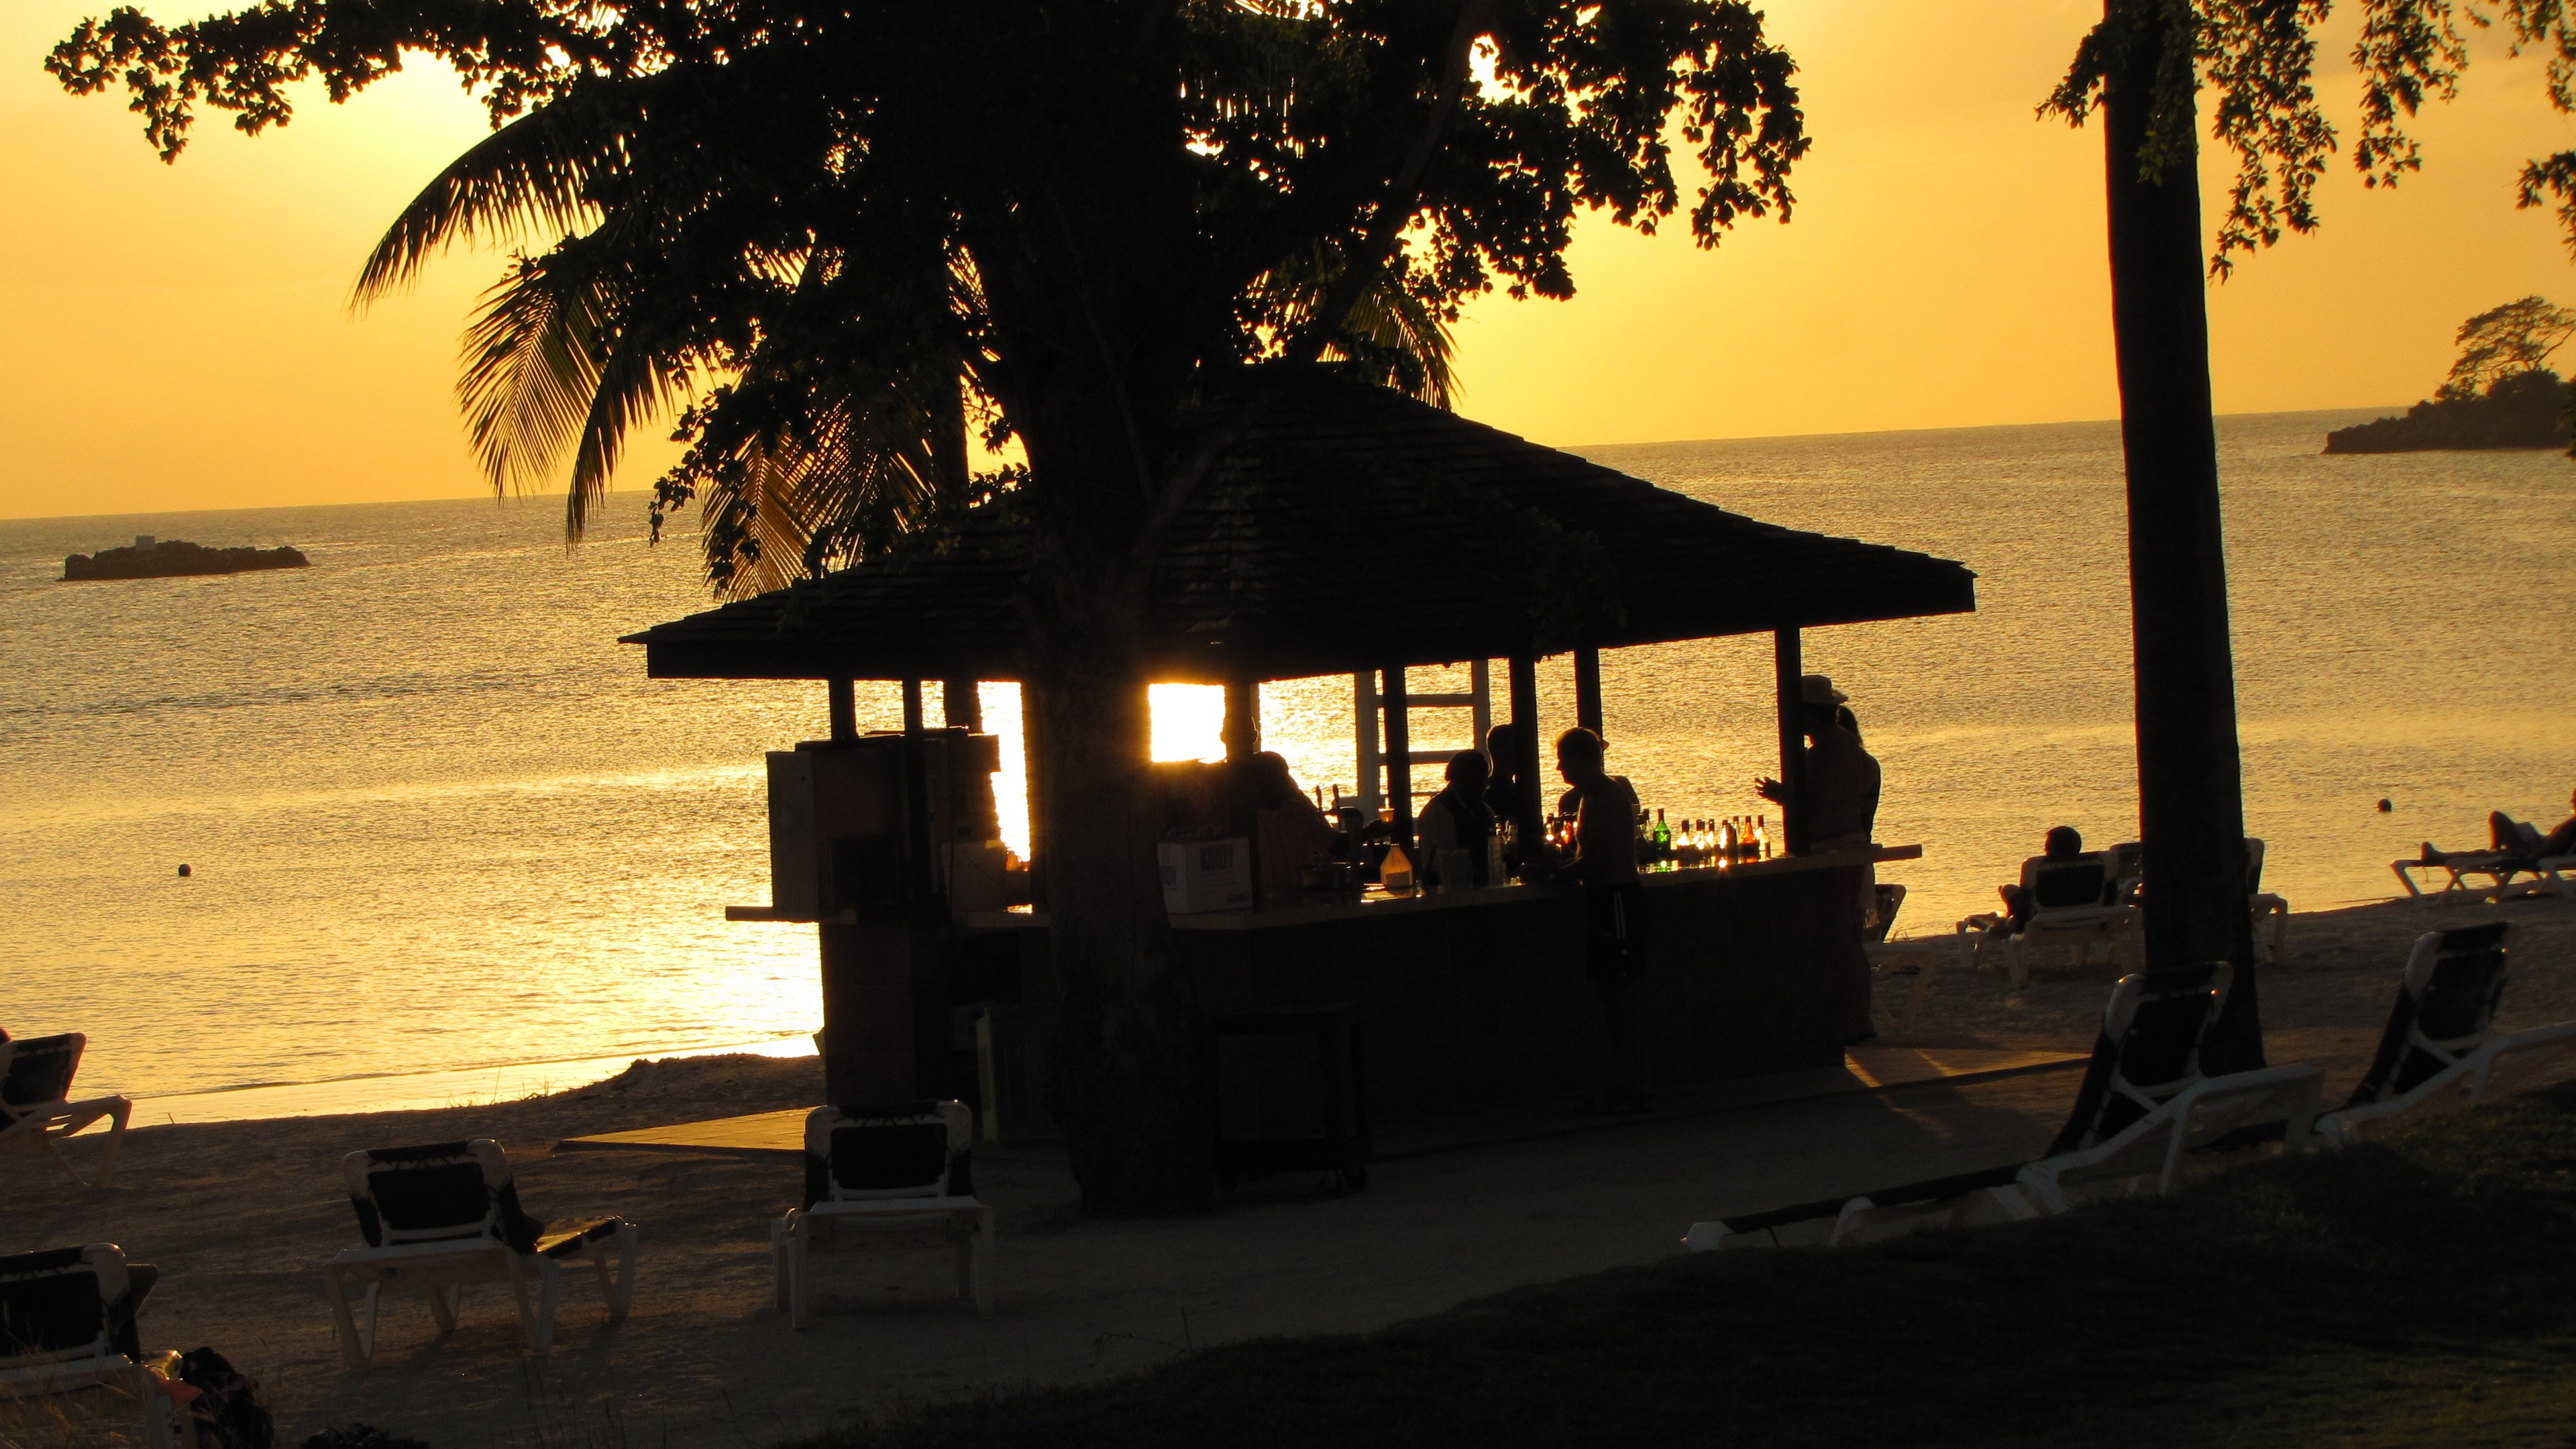 General 3840x2160 Jamaica beach hut silhouette sunset trees tropical sunlight people